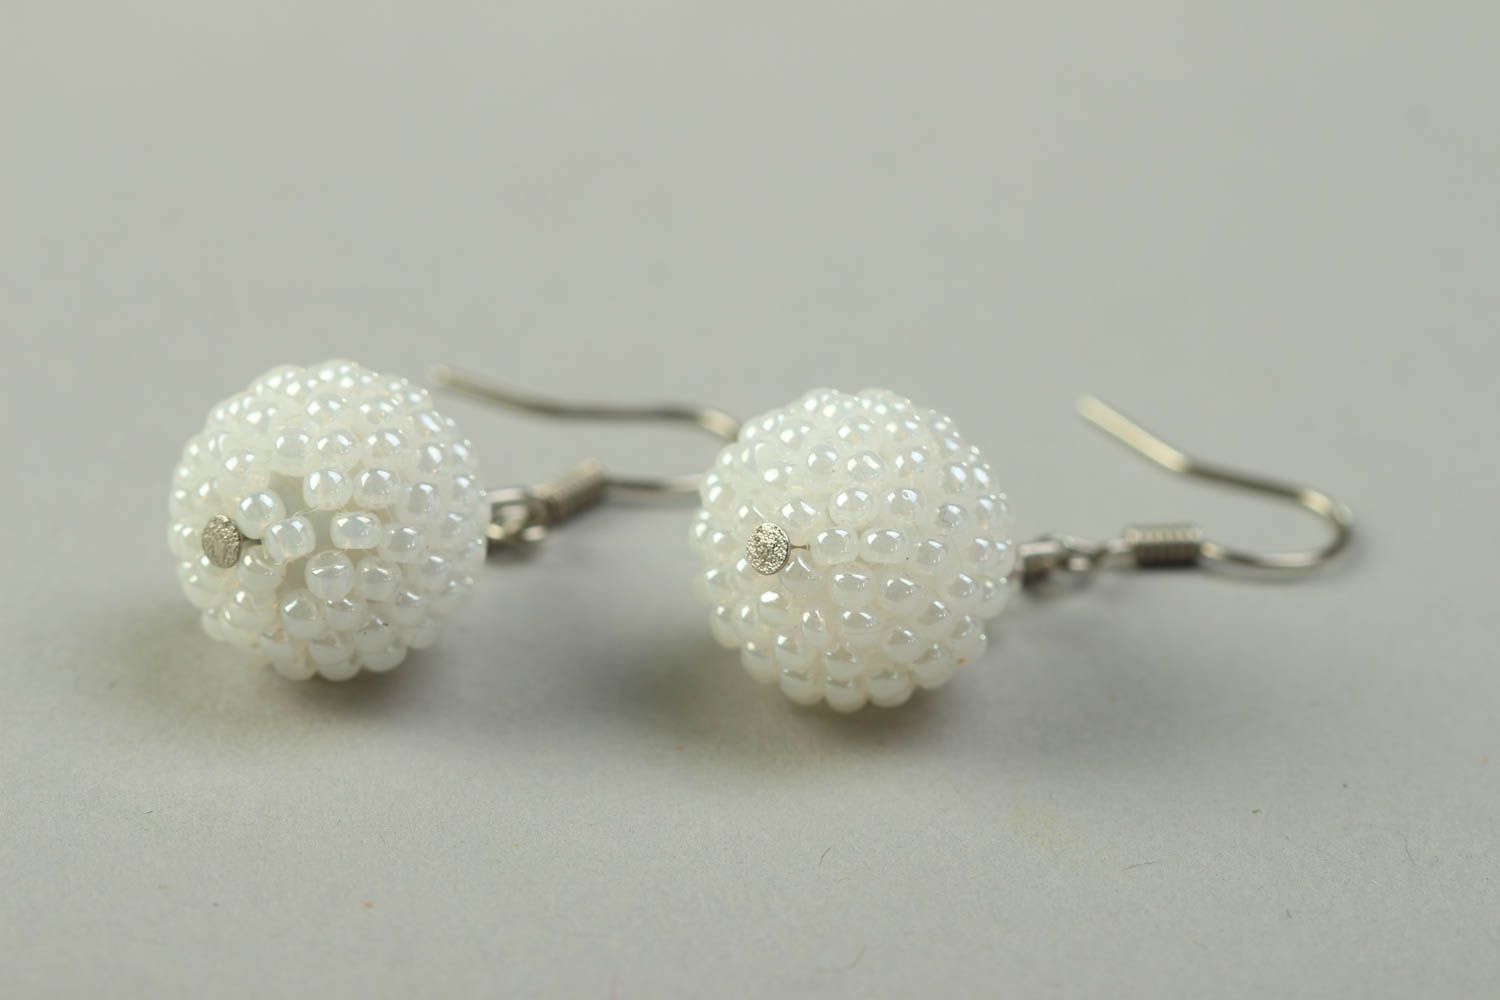 Handmade beautiful earrings festive white earrings designer accessory photo 3